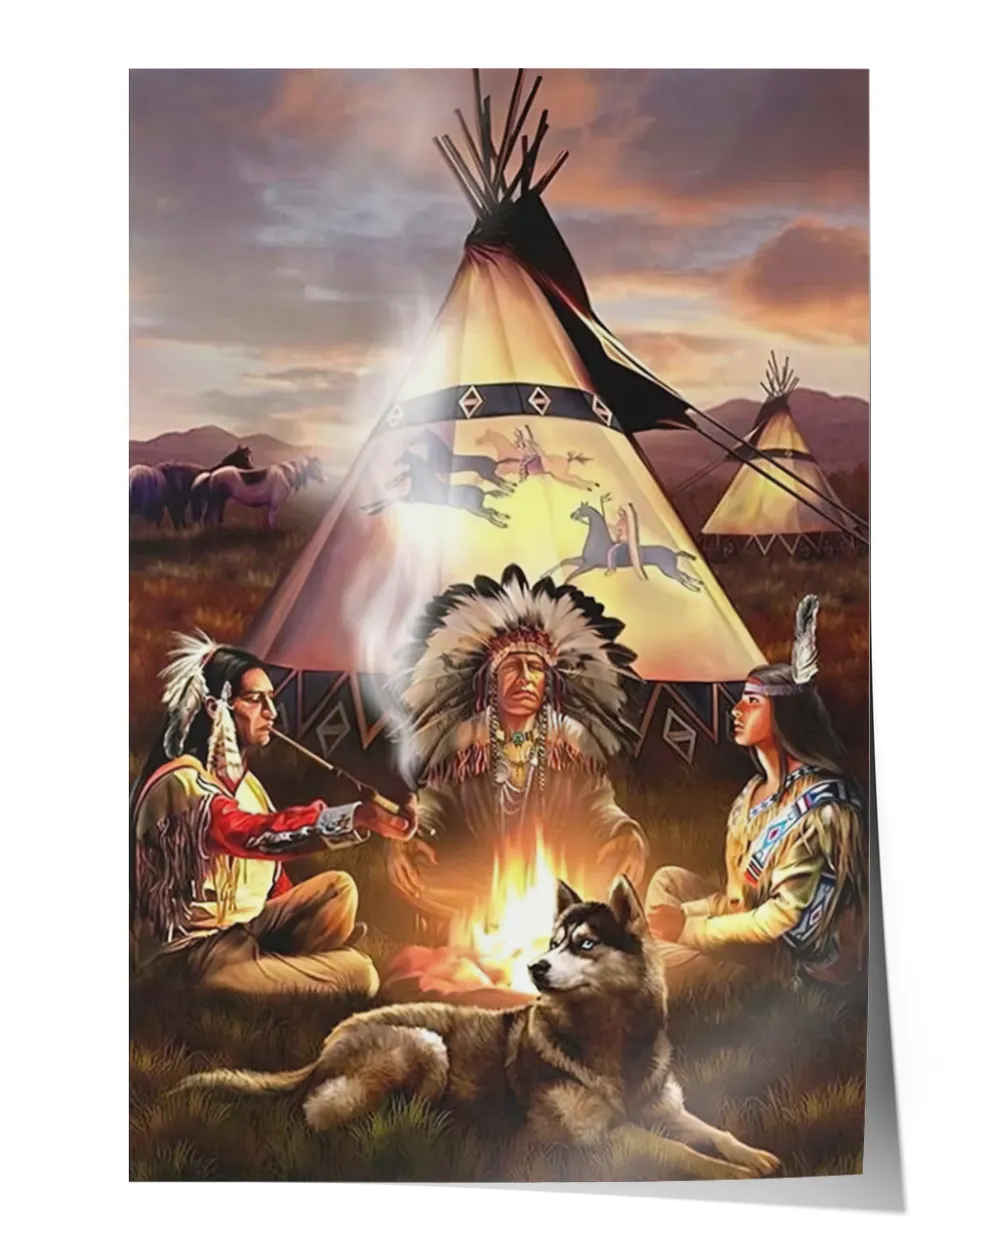 naa-jlv-16 native american campfire